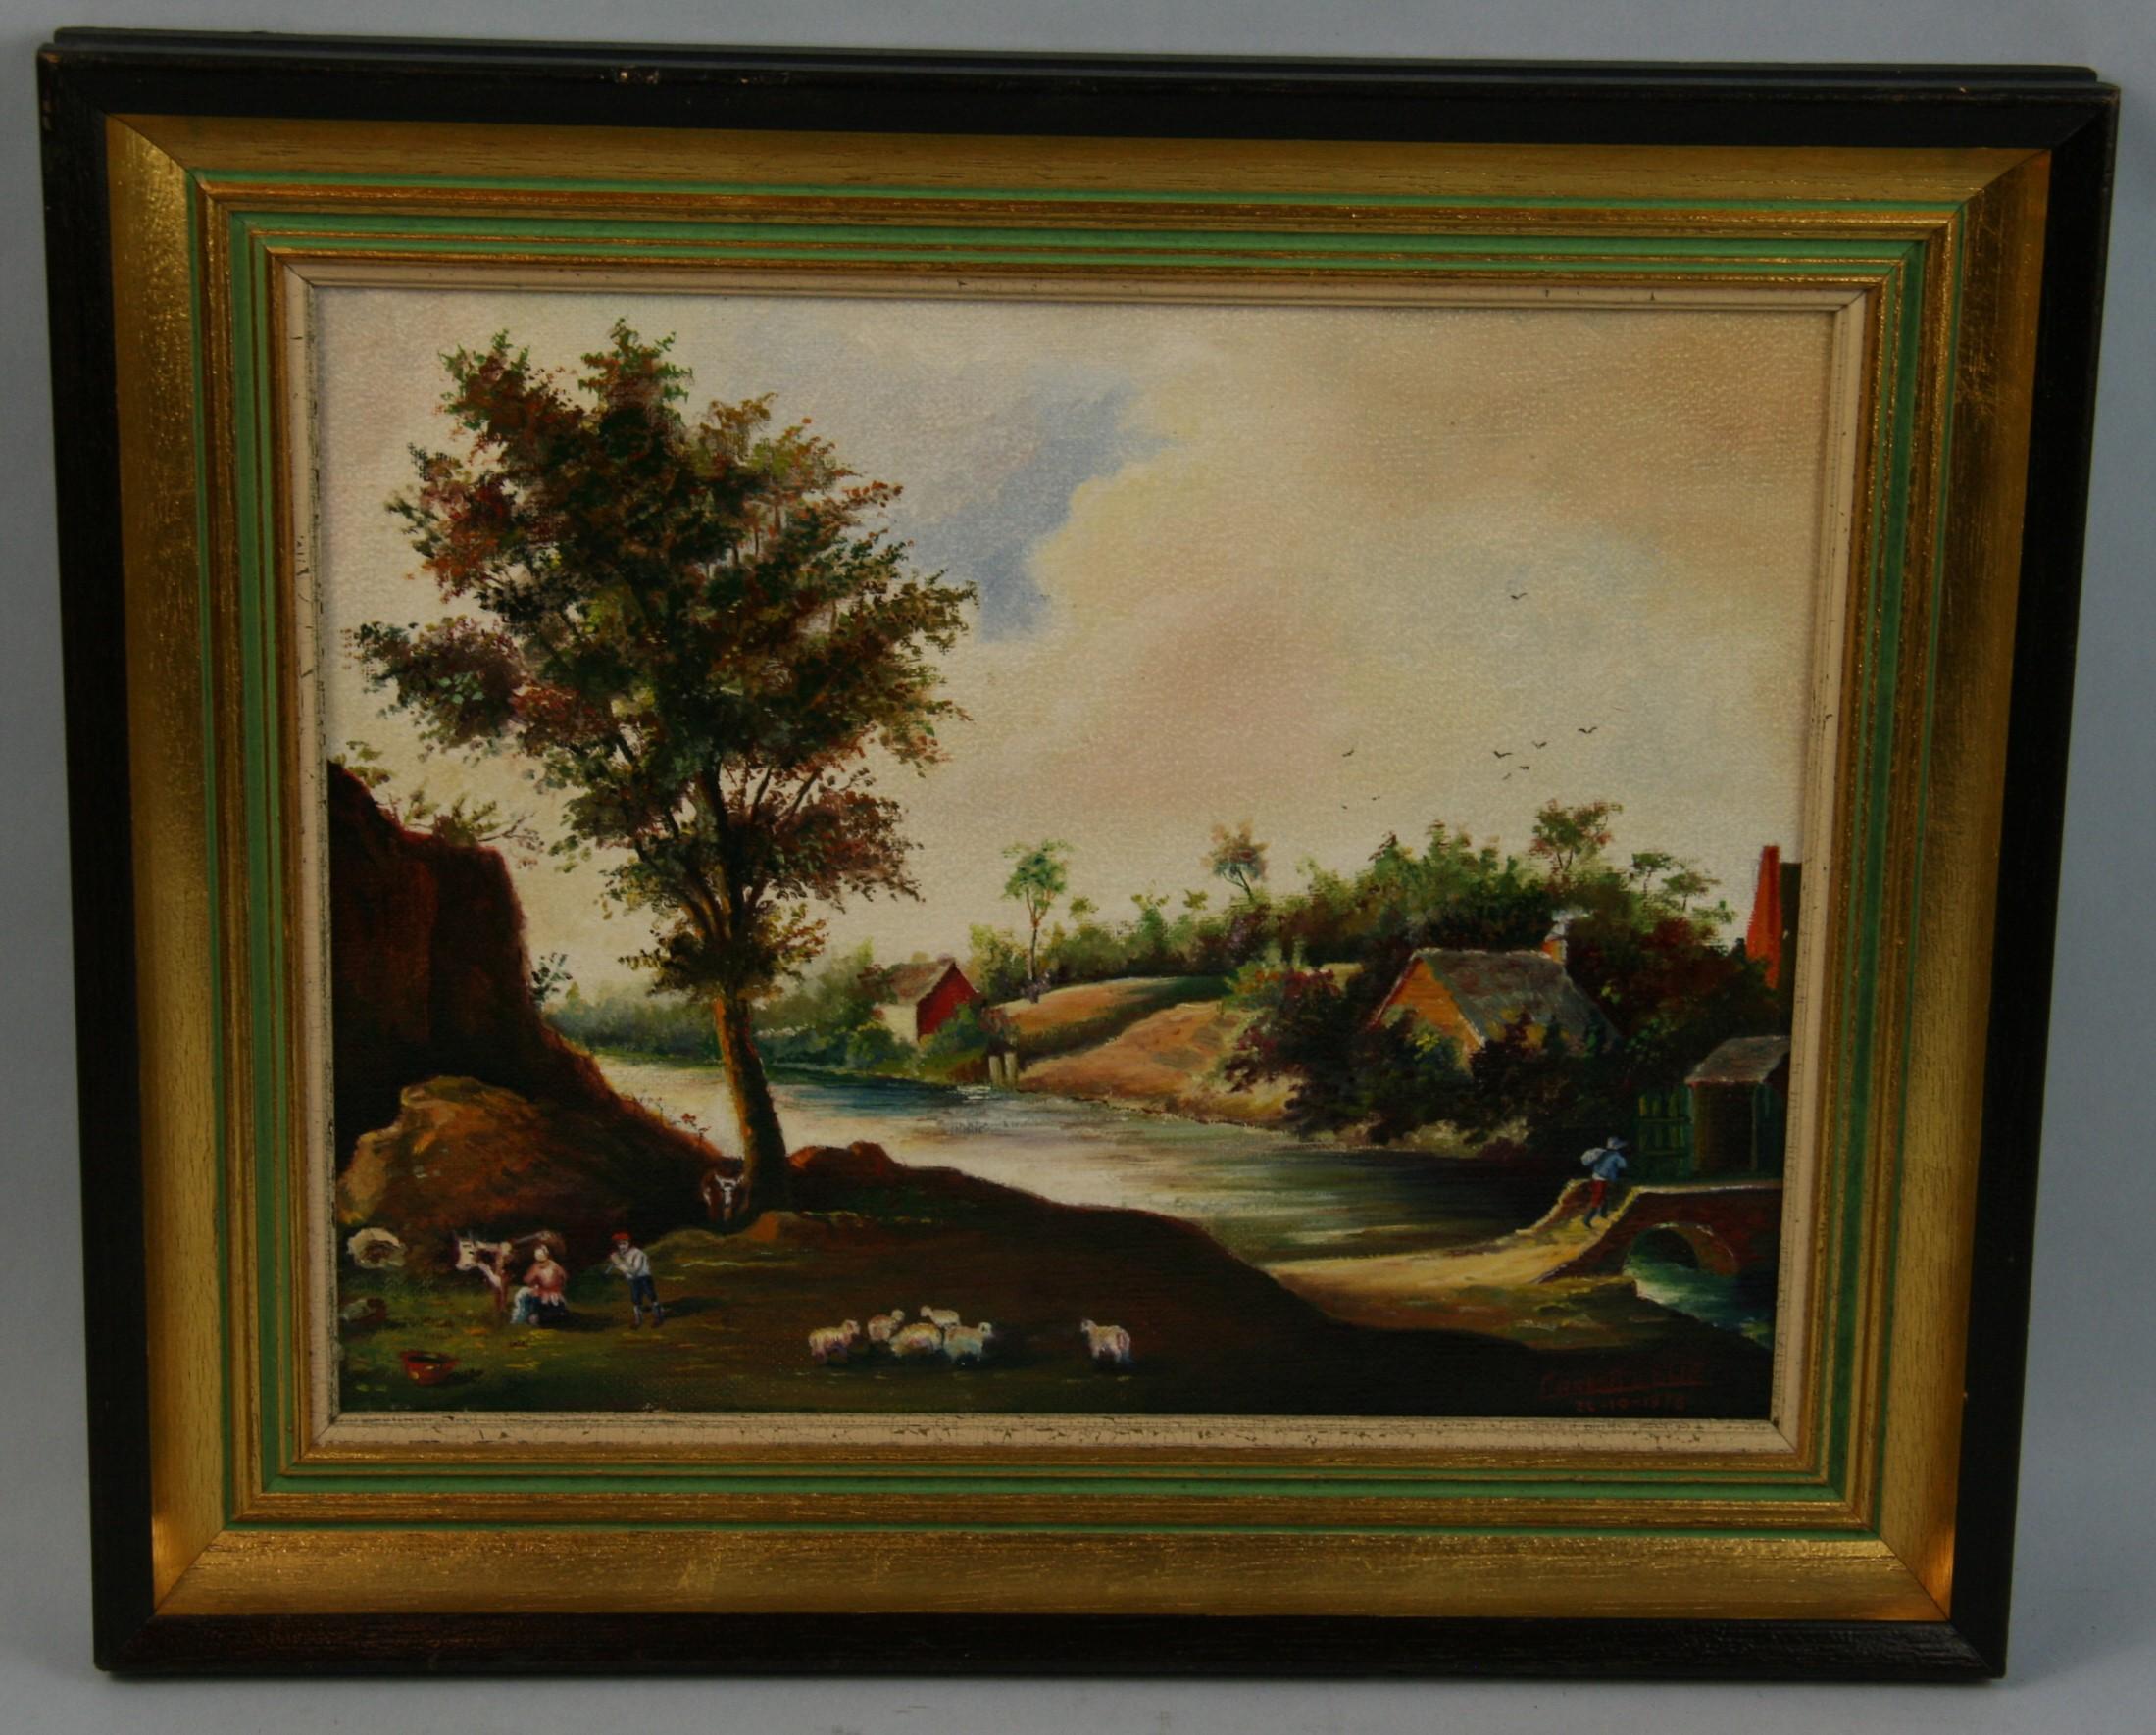 3940 Dutch bucolic landscape oil painting on canvas 
Image size 9x11